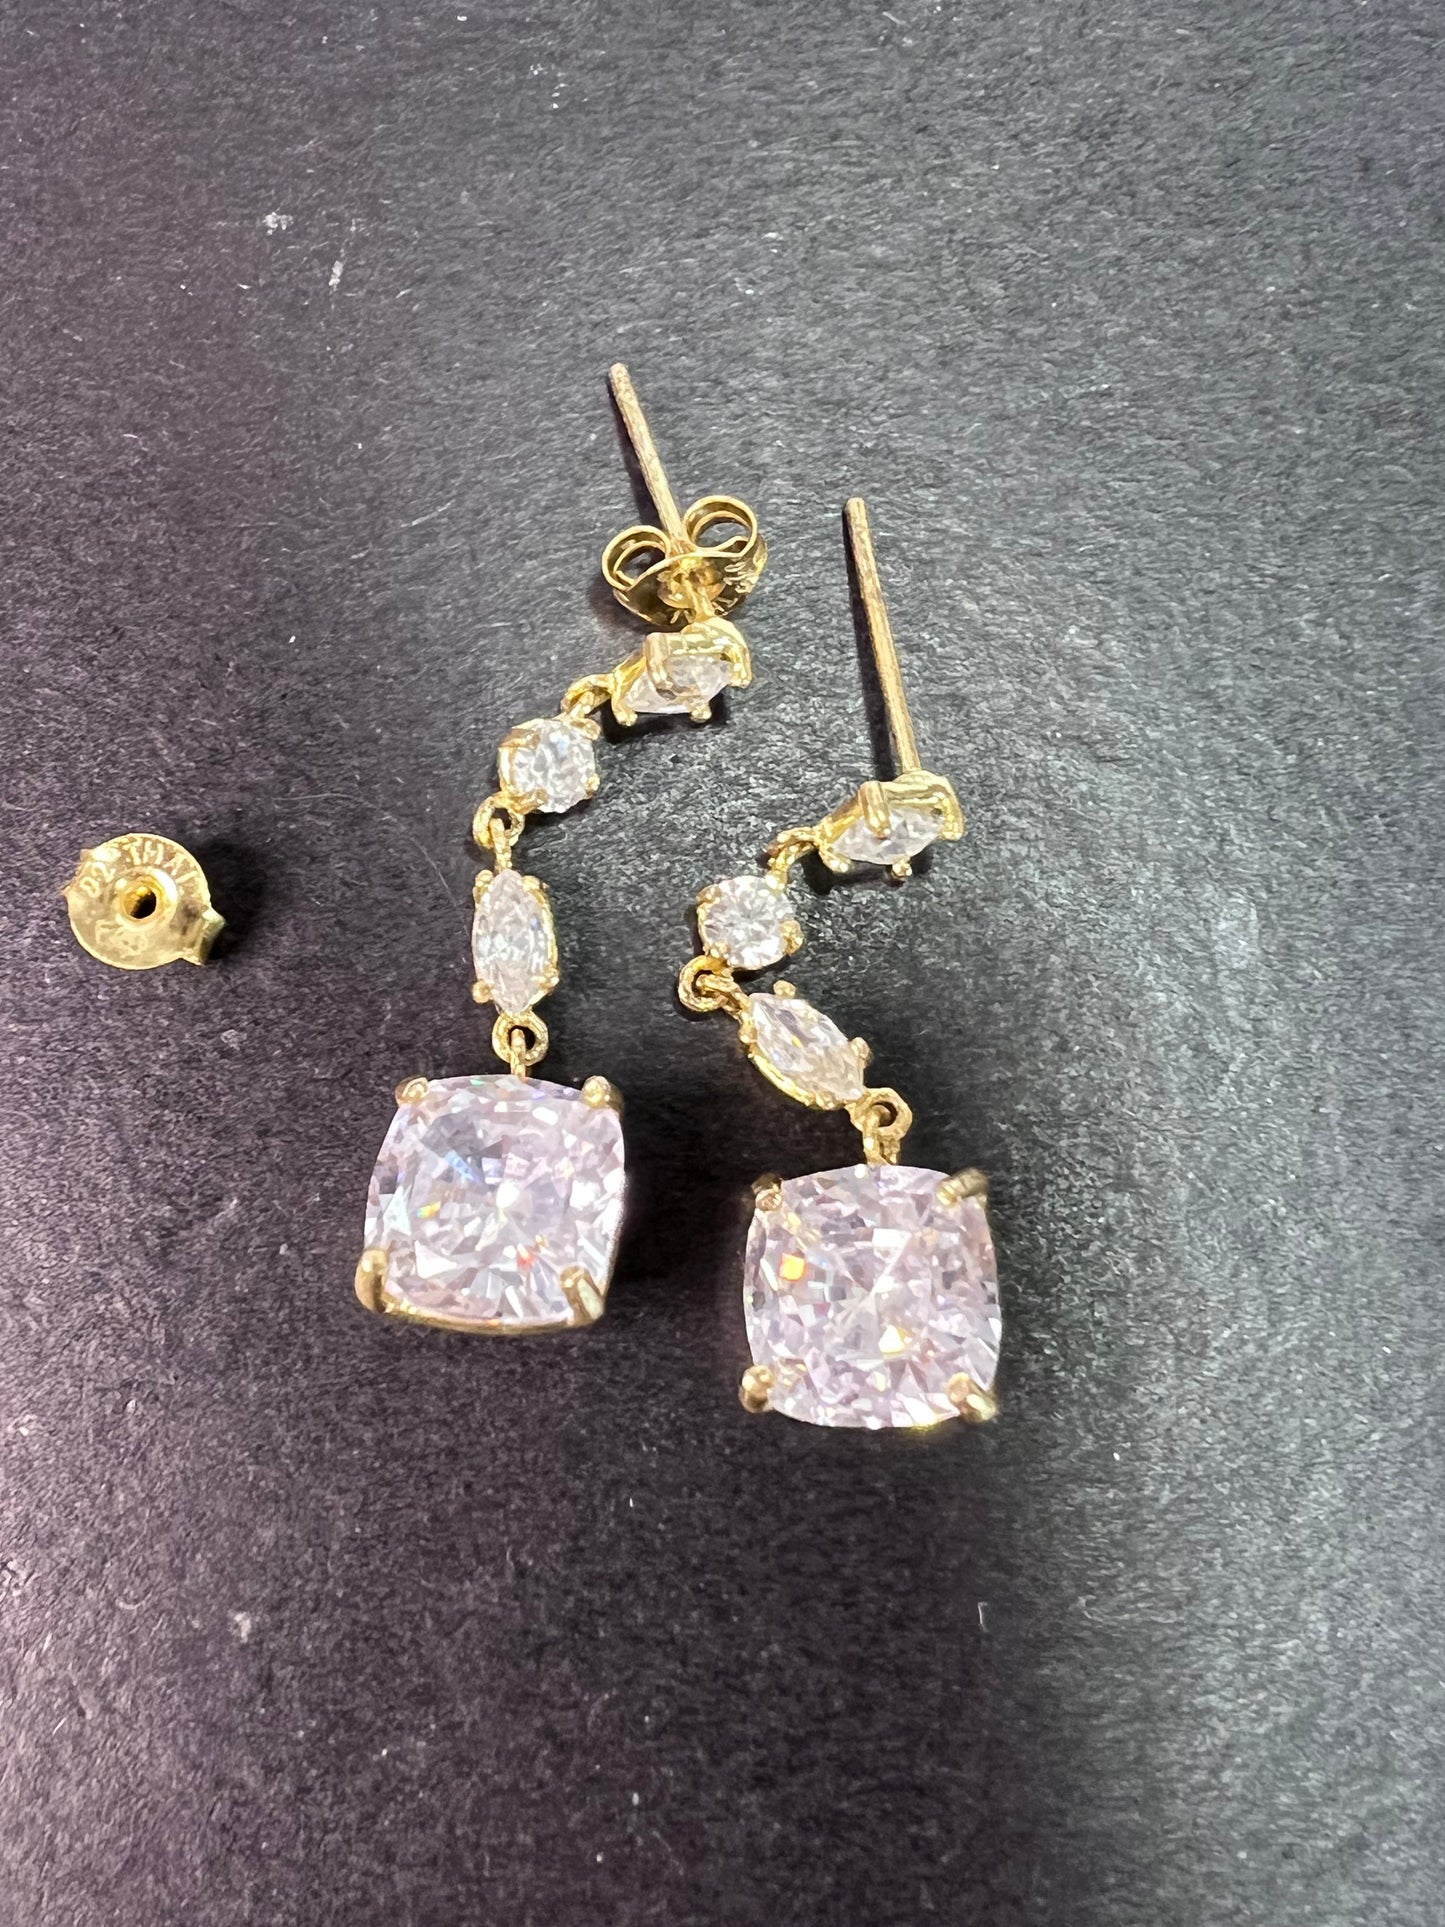 18k gold over sterling silver CZ earrings